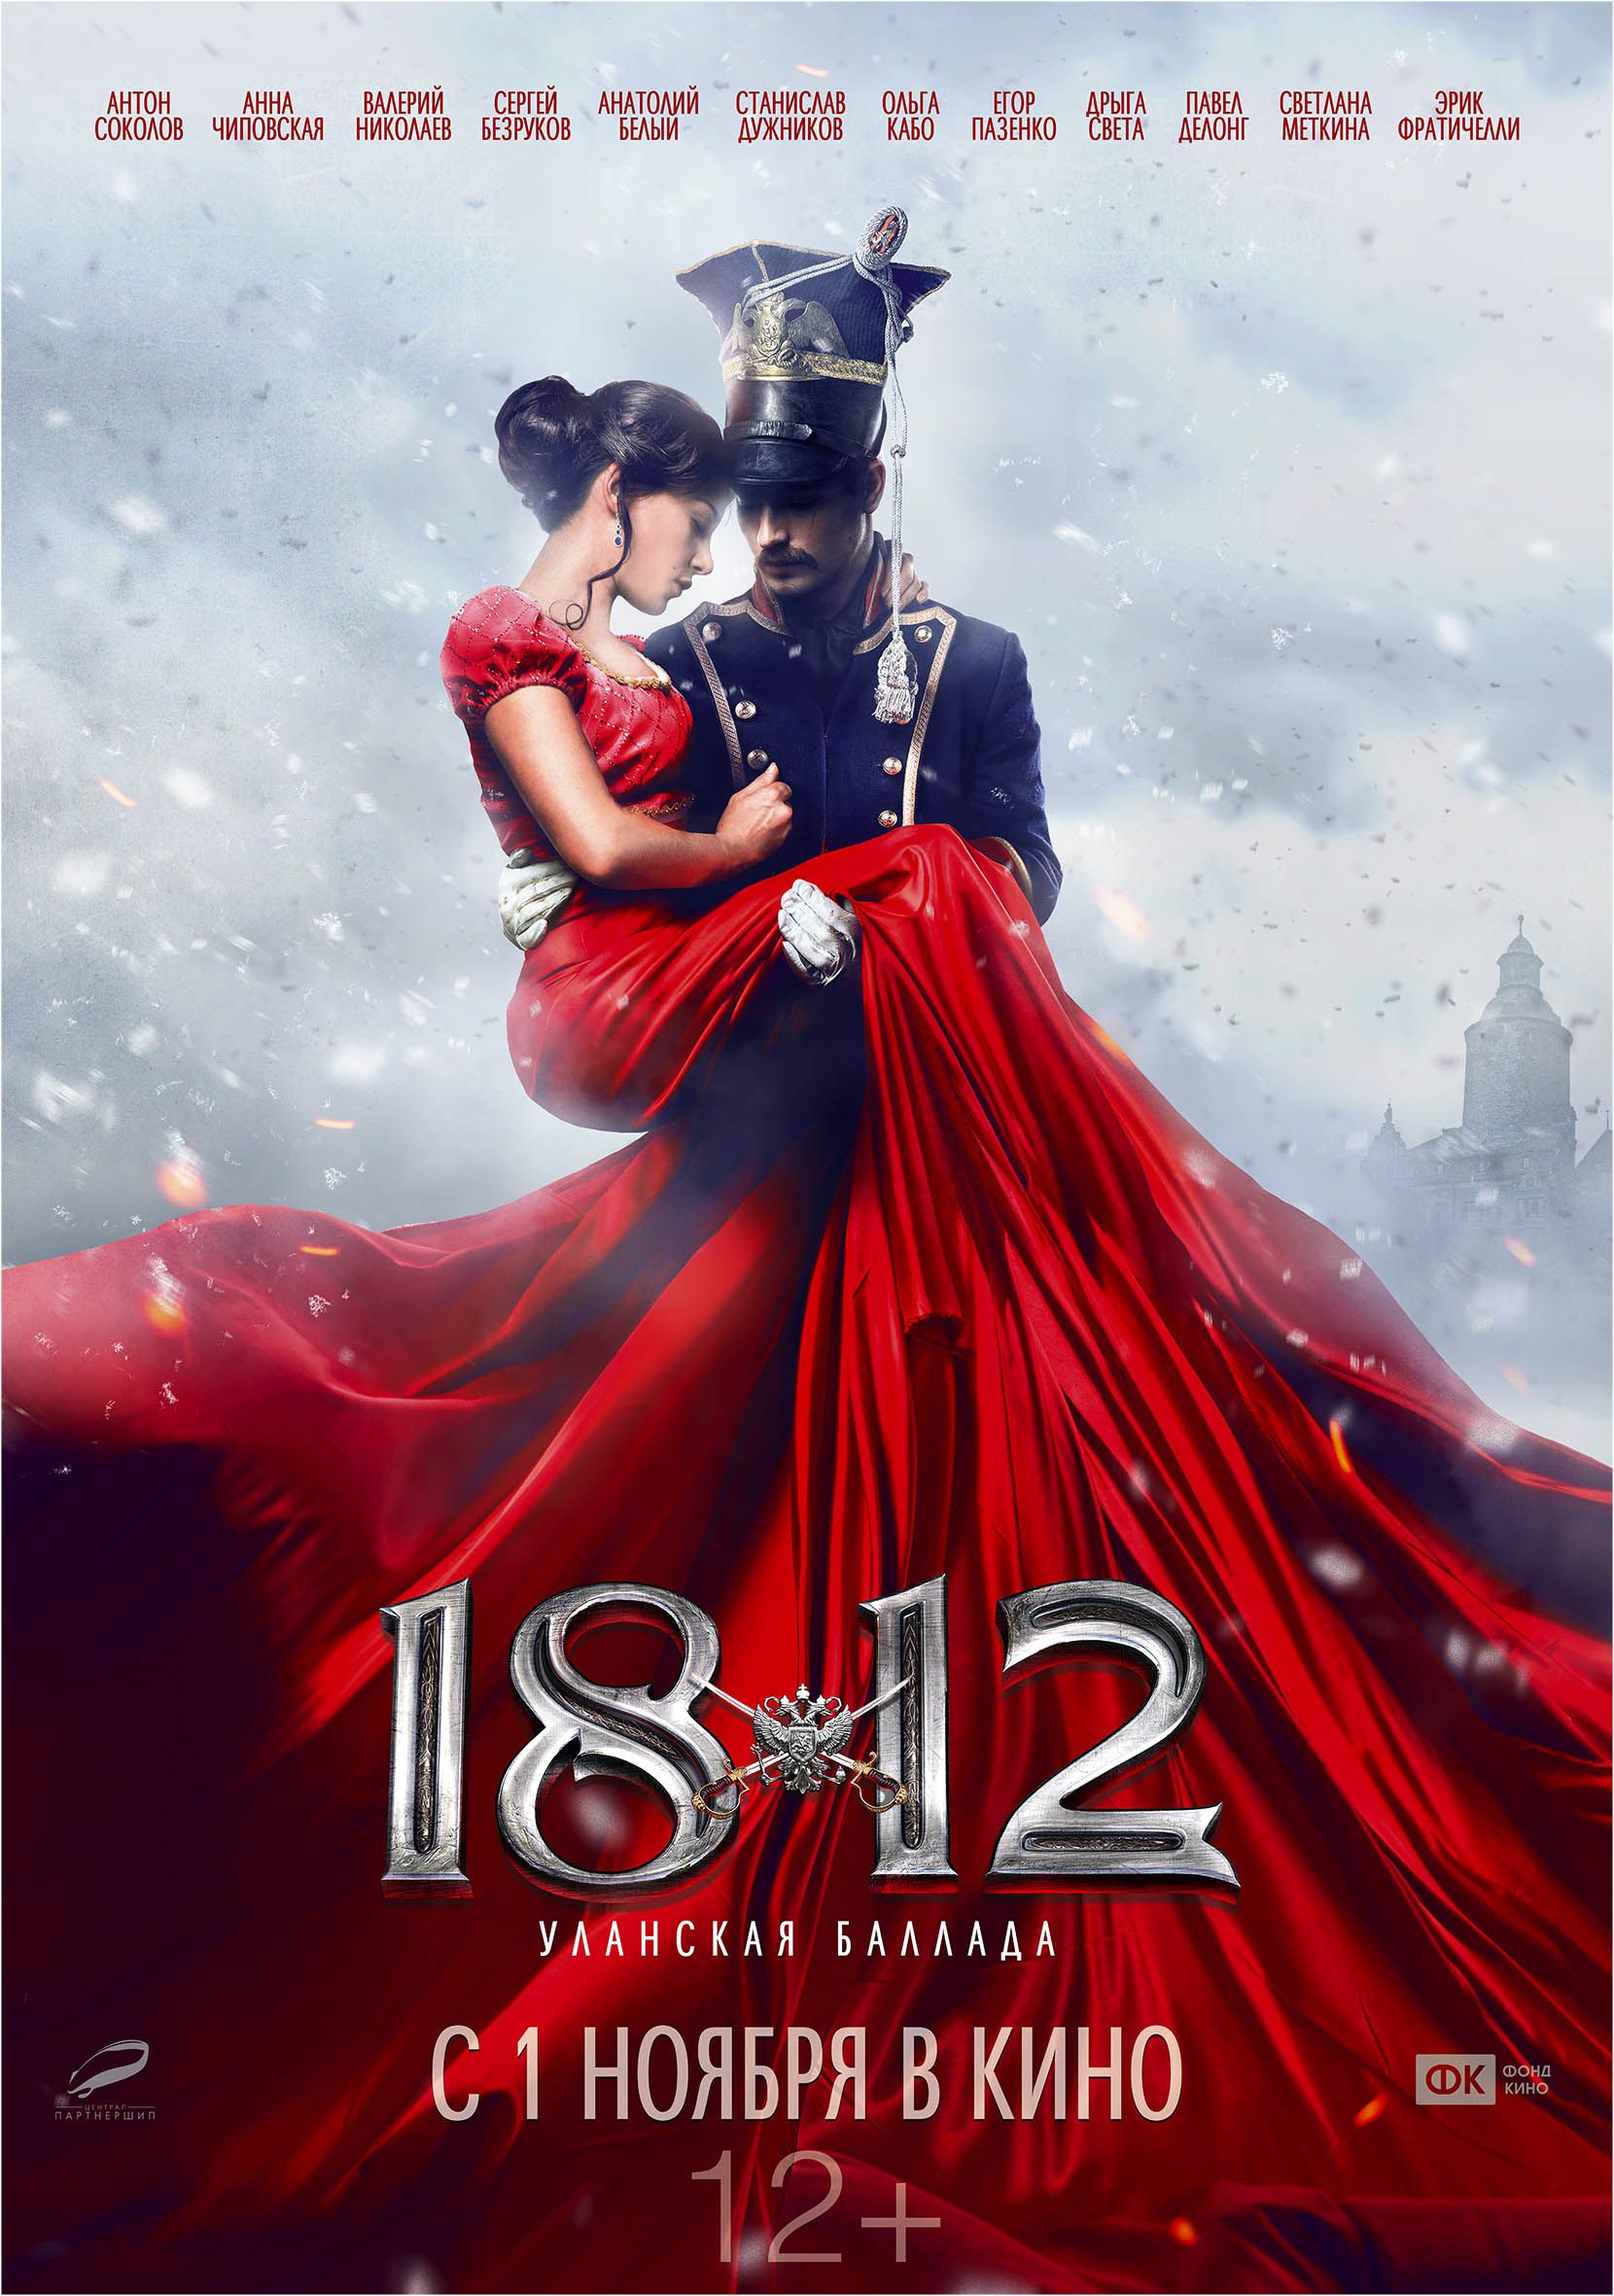 1812 Ulanskaya ballada (2012) Hindi Dubbed Movie